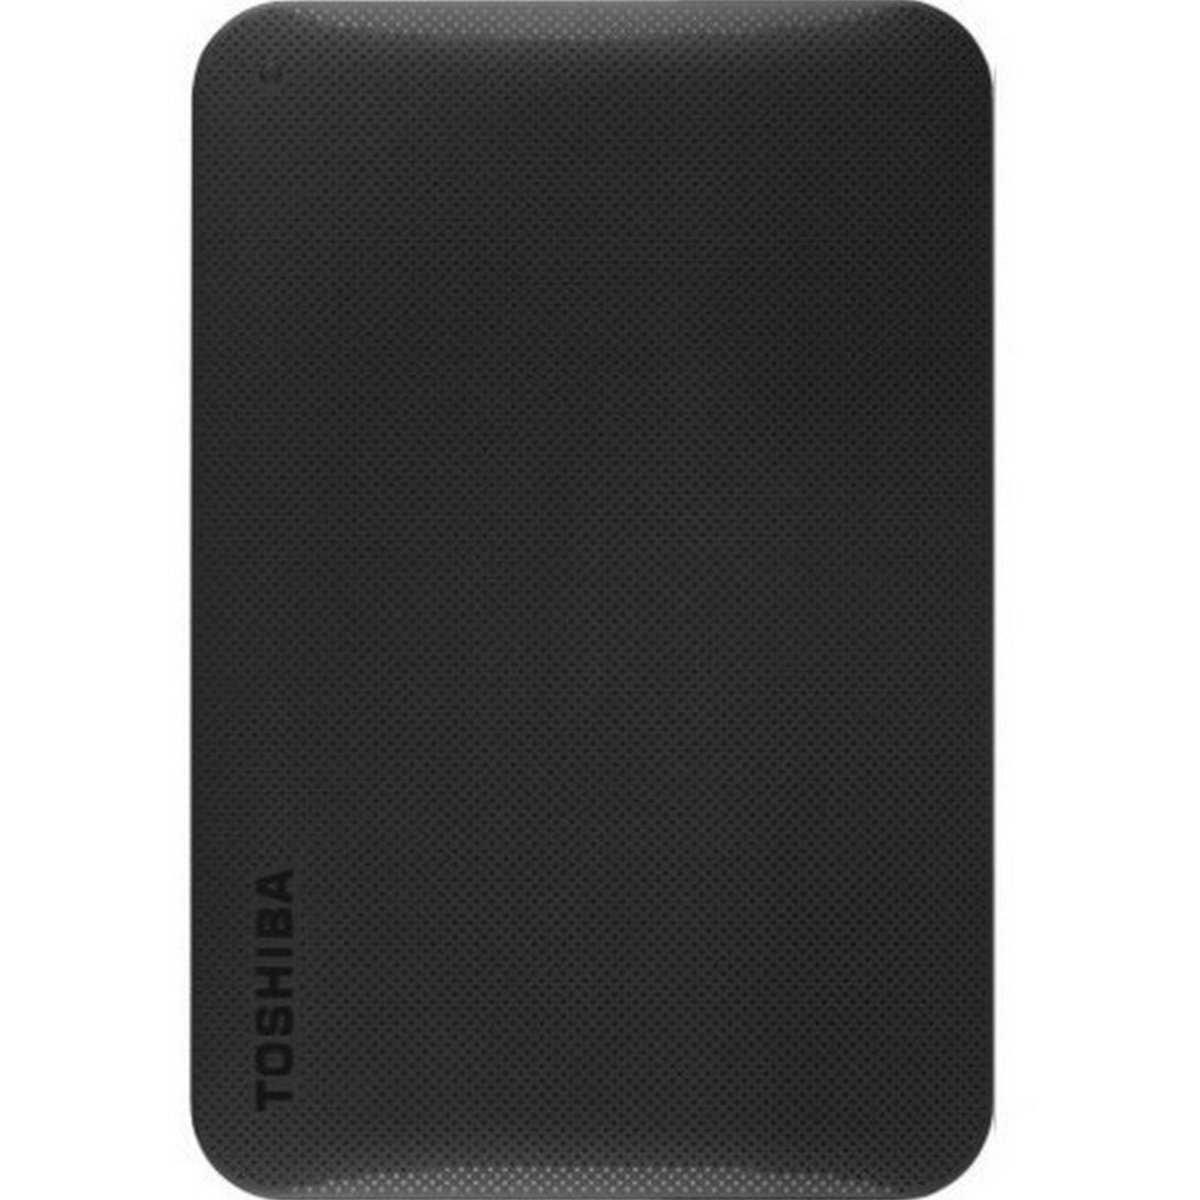 Toshiba HDD Canvio Ready TP220 2TB Black